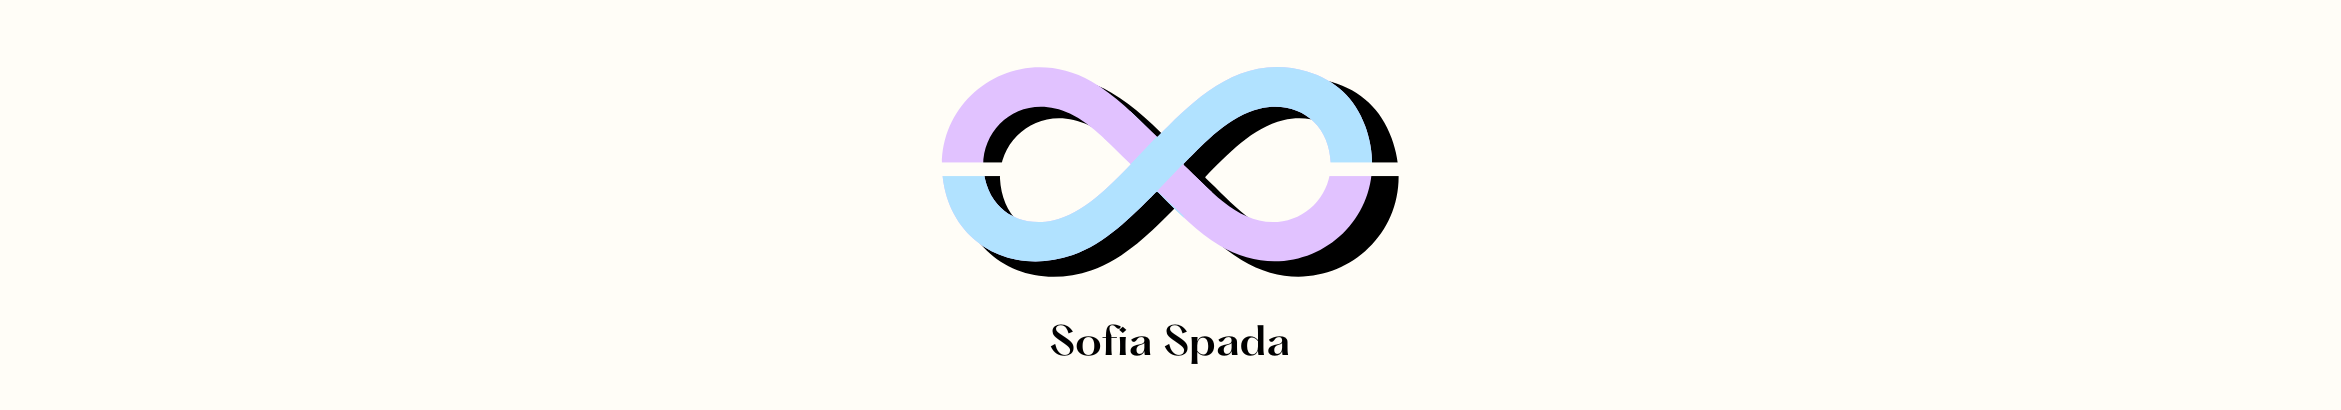 Sofia Spada da Silva 的个人资料横幅